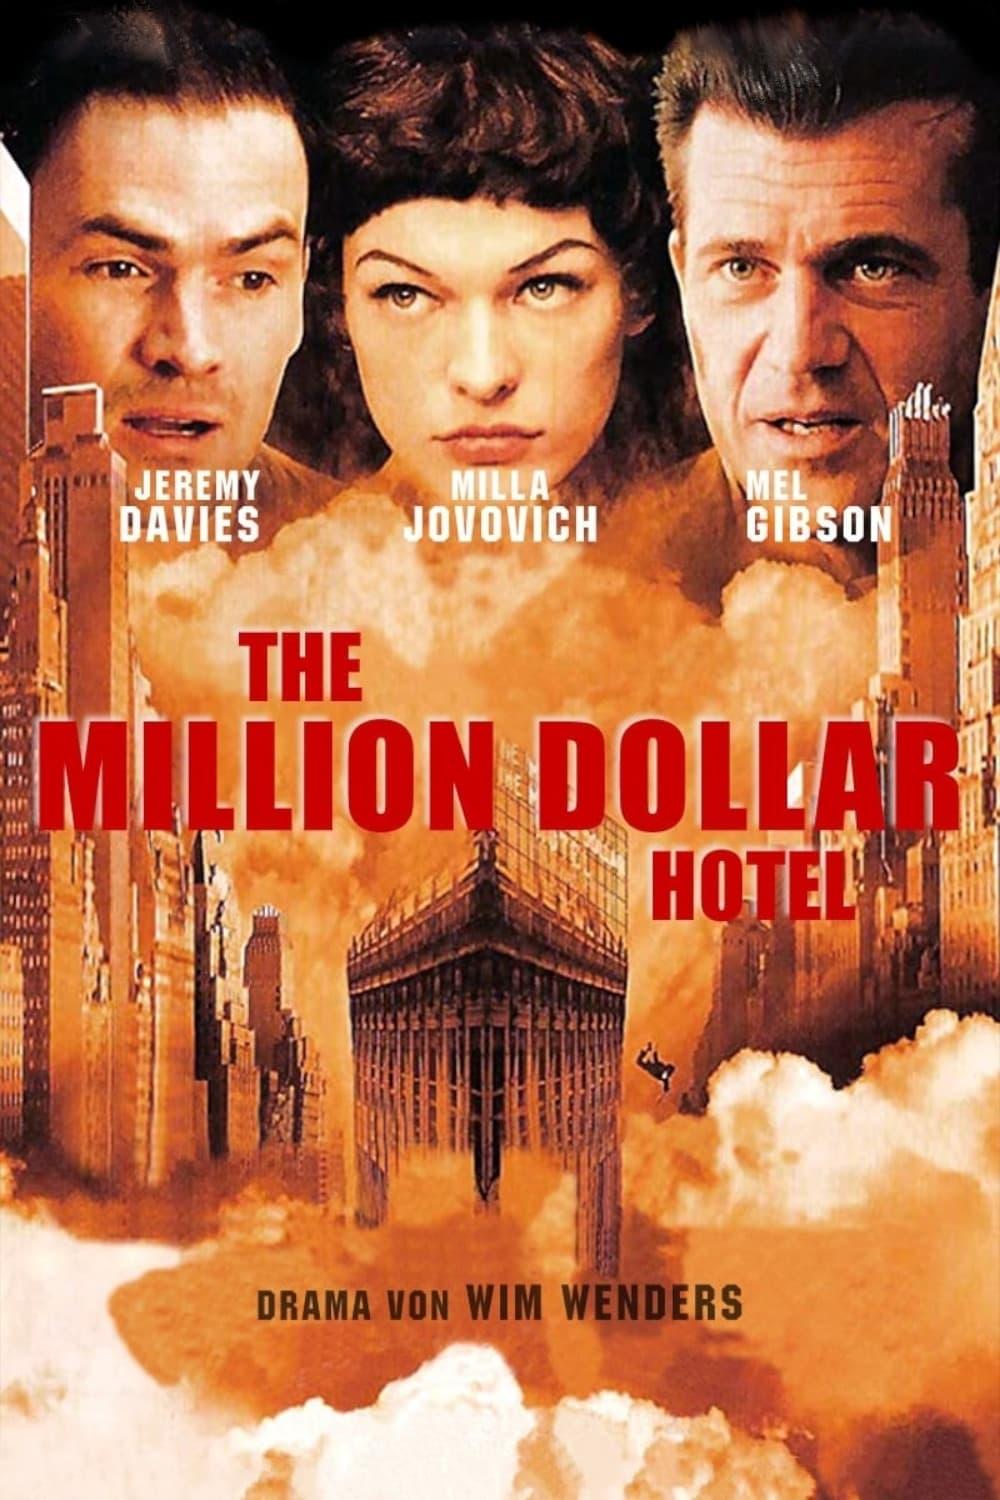 The Million Dollar Hotel poster